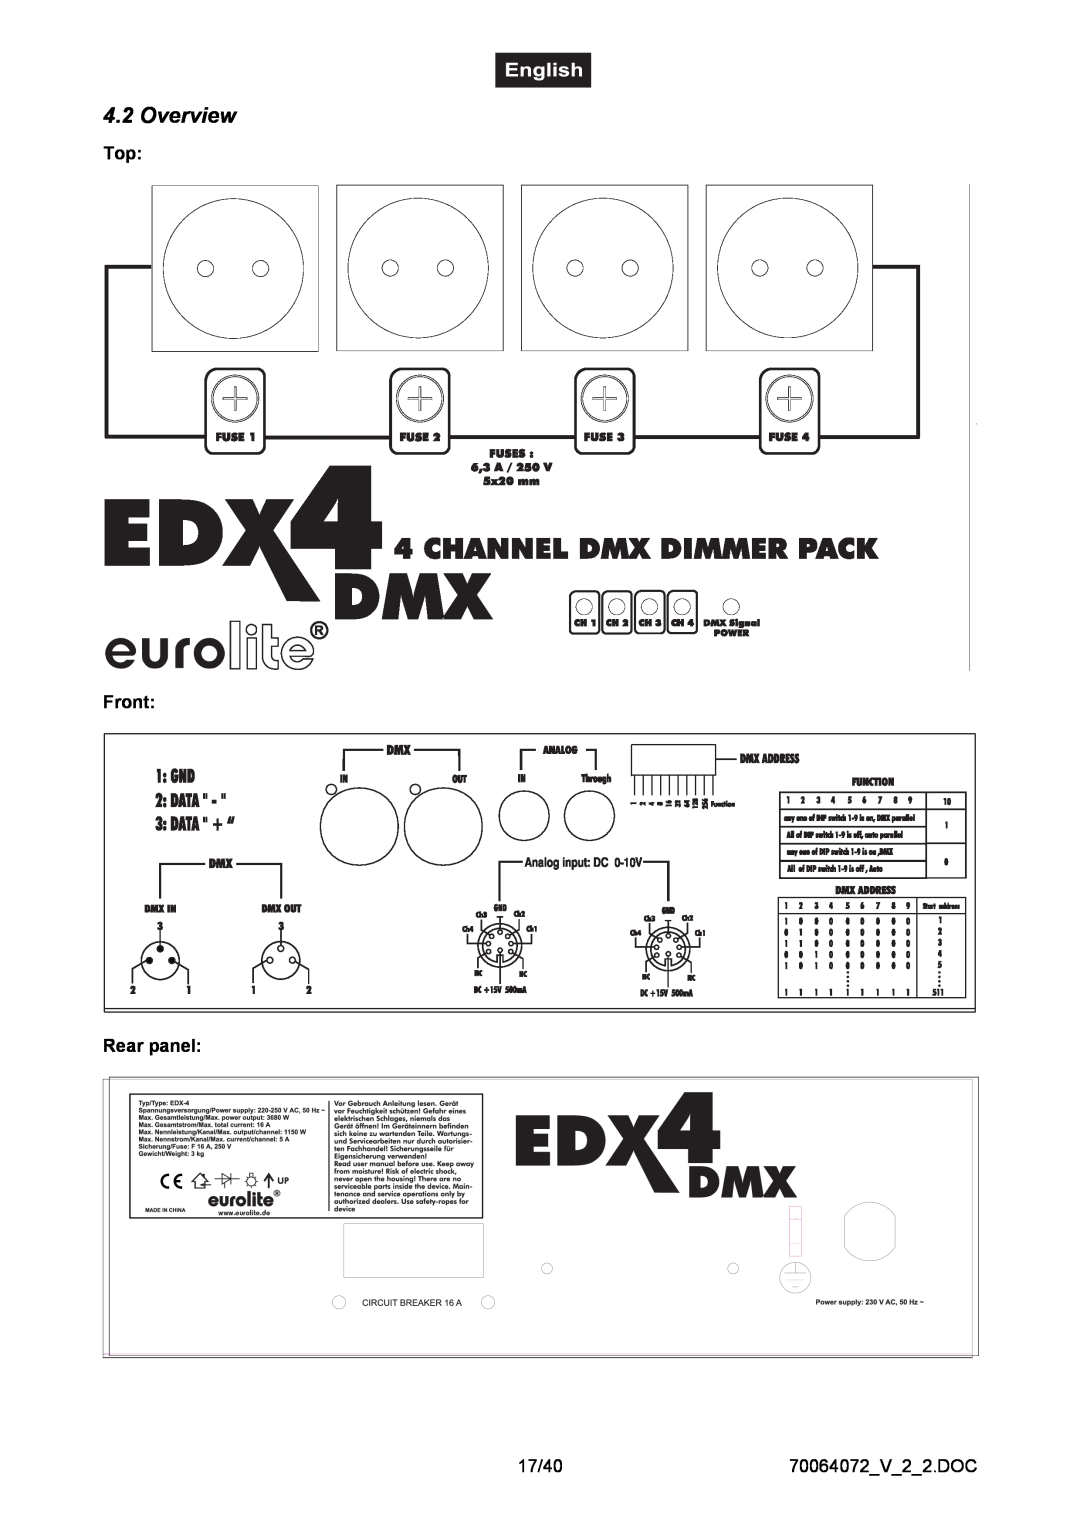 EuroLite Cases 4-channel DMX dimmer pack, EDX-4 user manual Overview, eurolite, Top Front Rear panel 